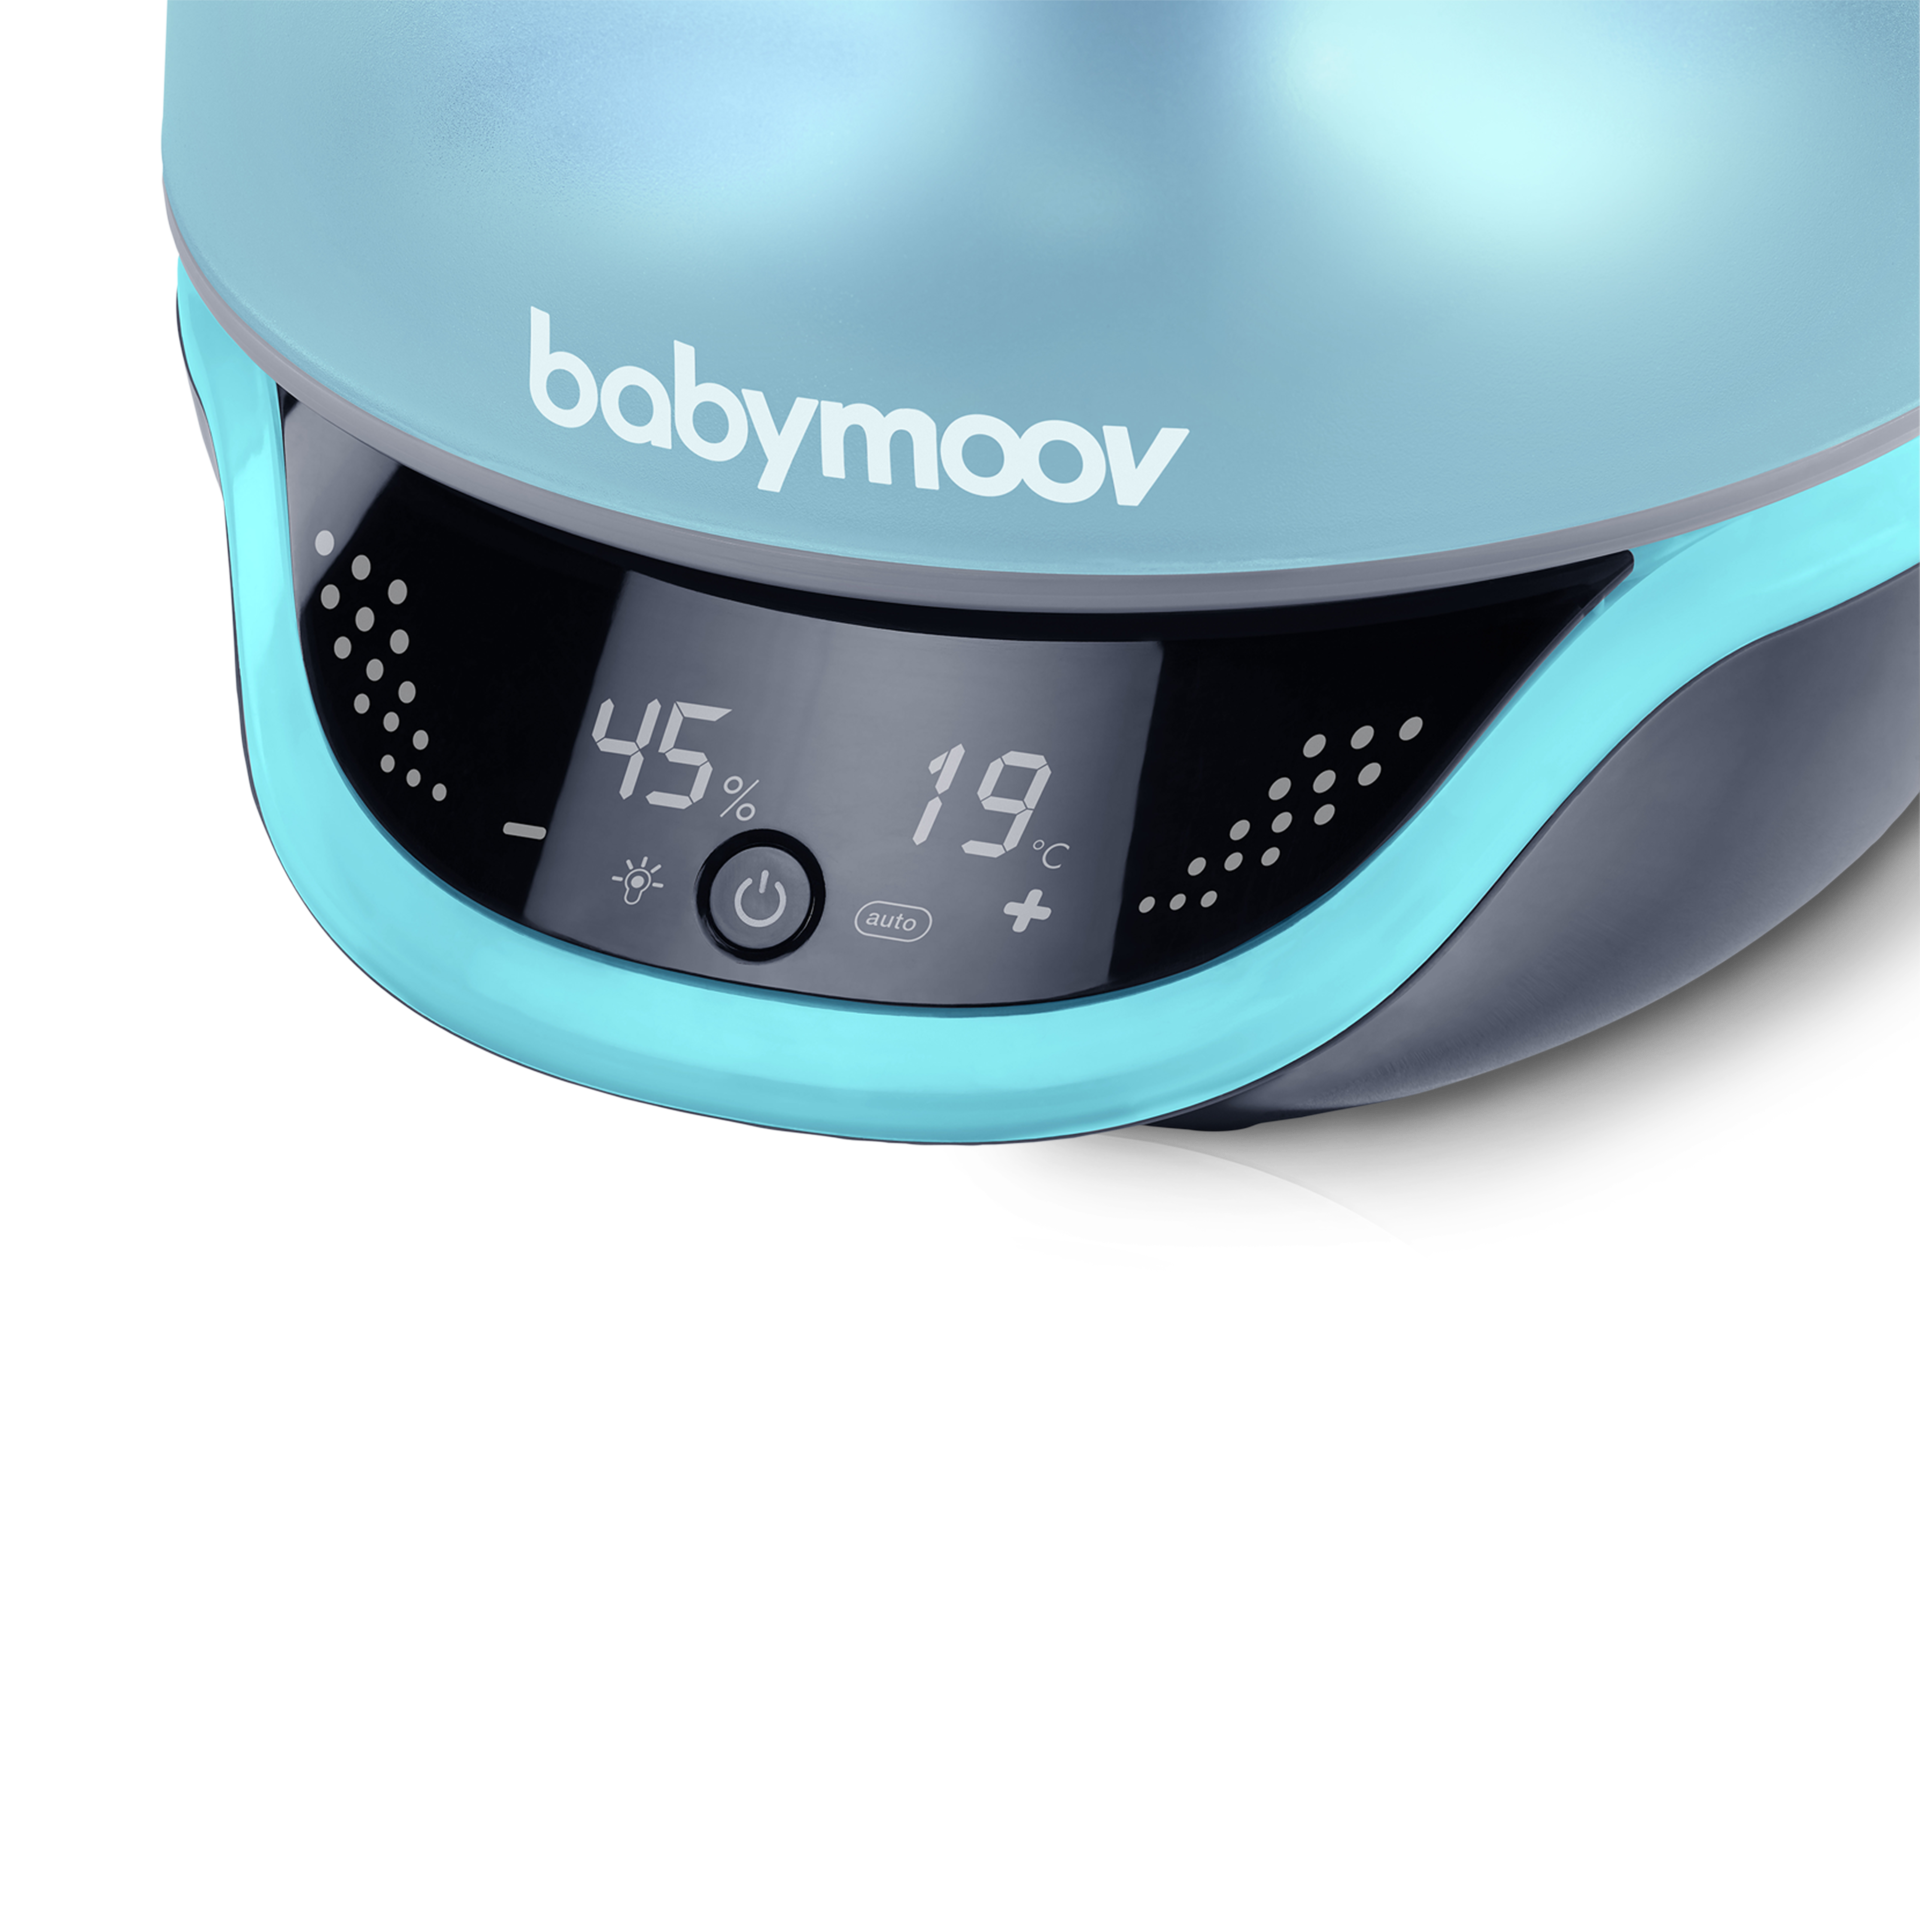 Humidifier With Essential Oil Diffuser & Nightlight Babymoov Baby Health Hygro 